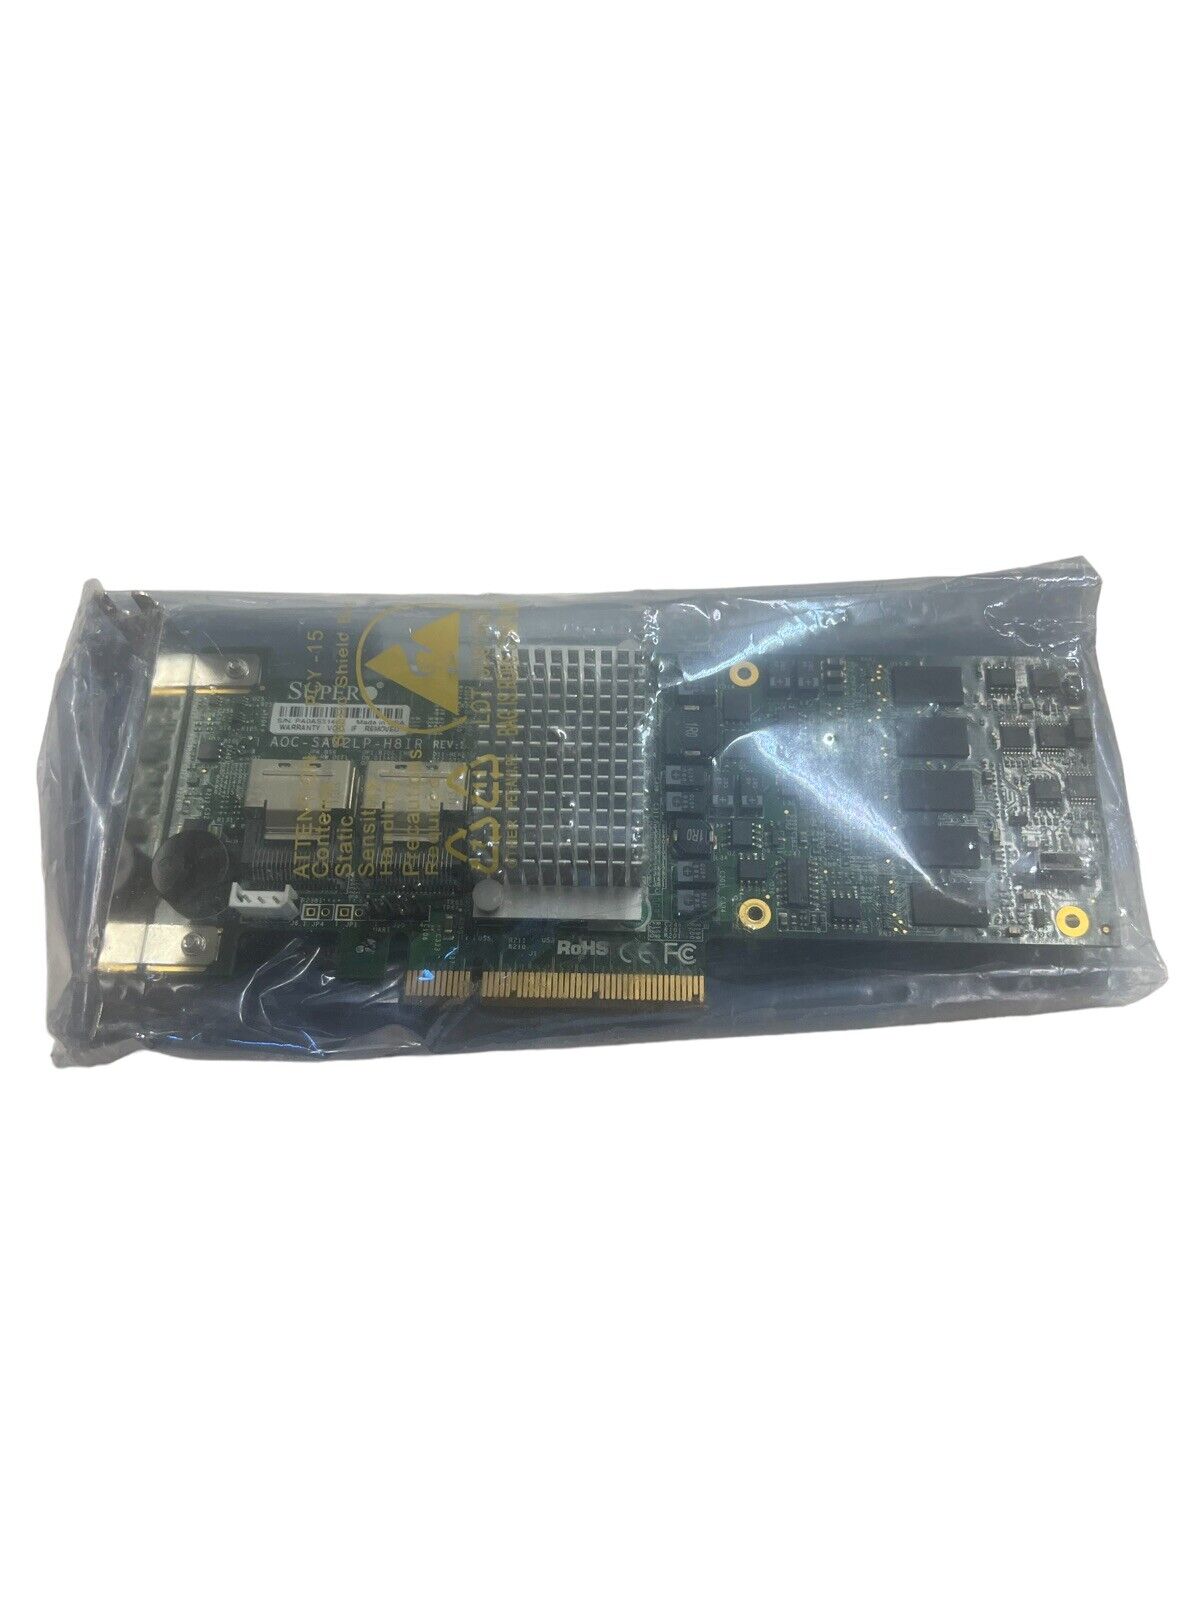 Supermicro AOC-SAS2LP-H8IR (LSI 9260-8i) SAS RAID Controller PCIe Card Tested